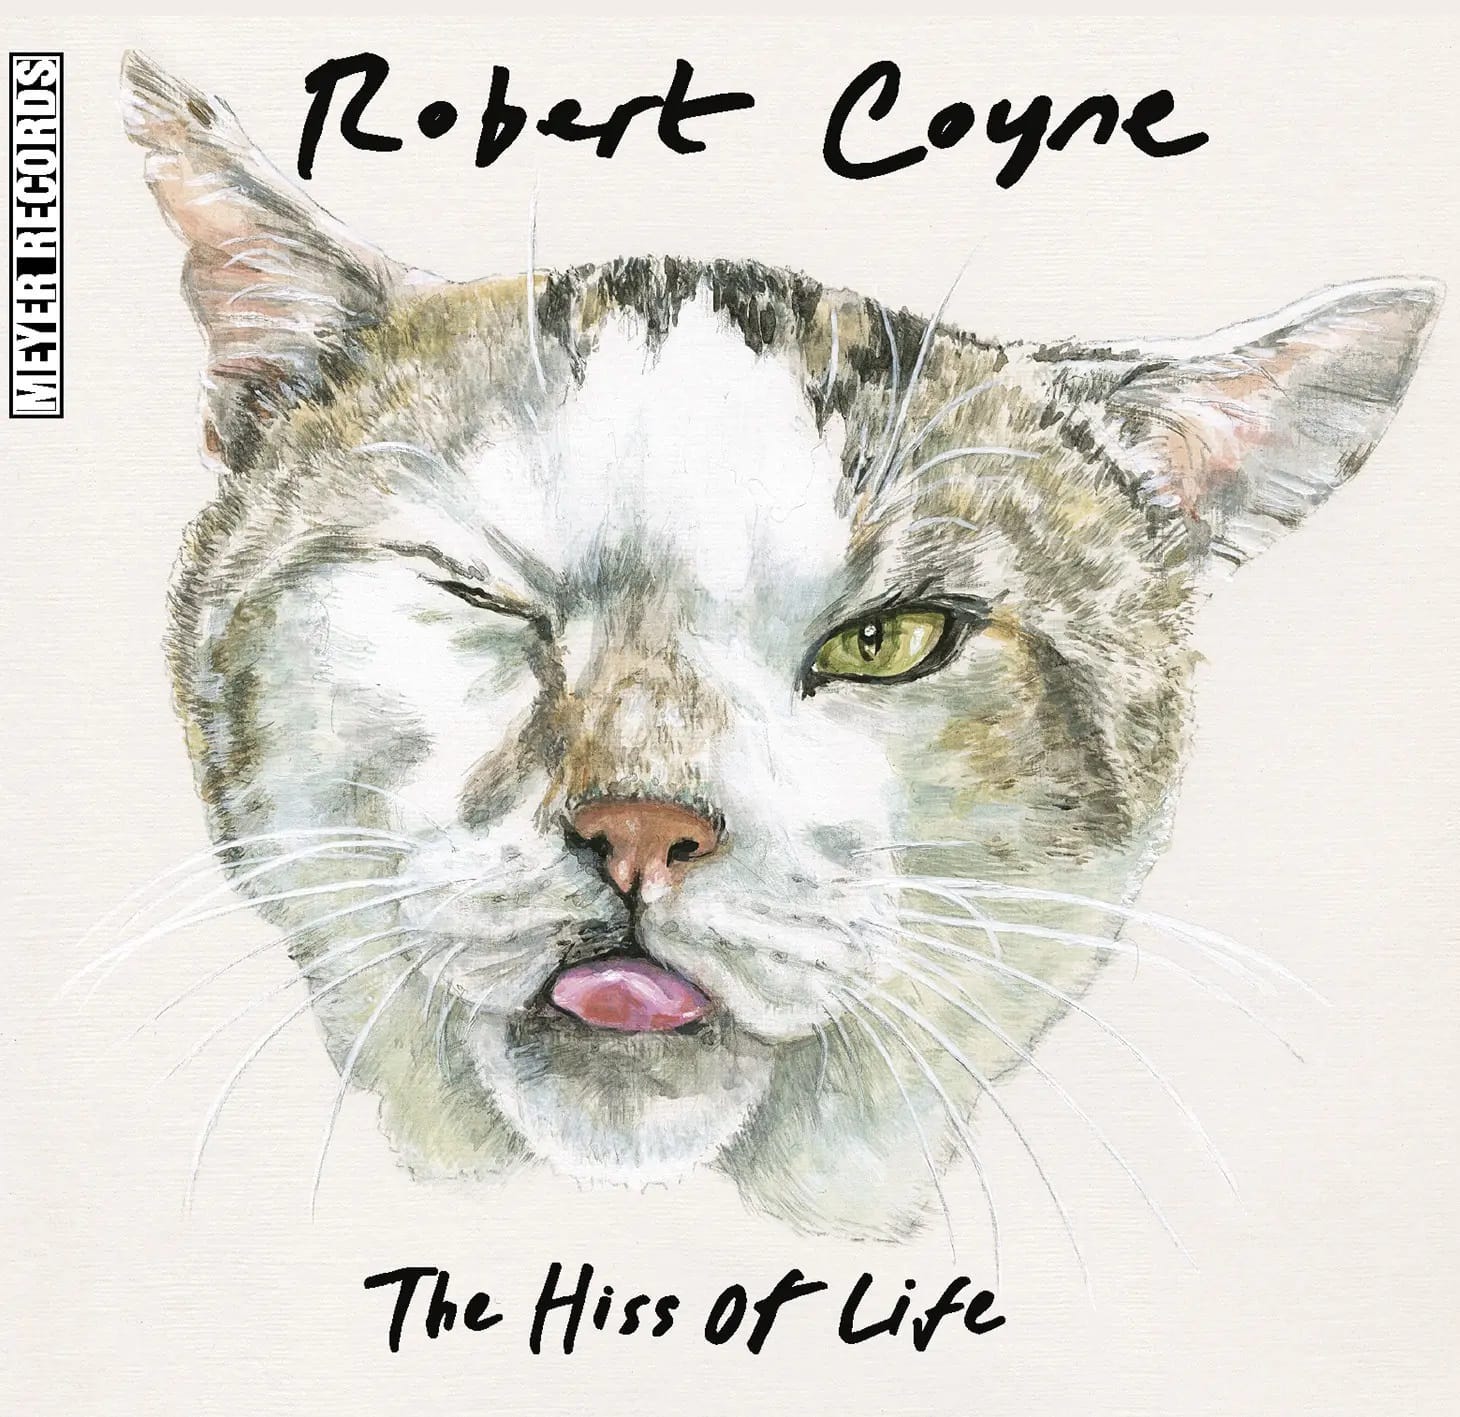 Cover der Robert-Coyne-CD "The Hiss of Life" (Bild